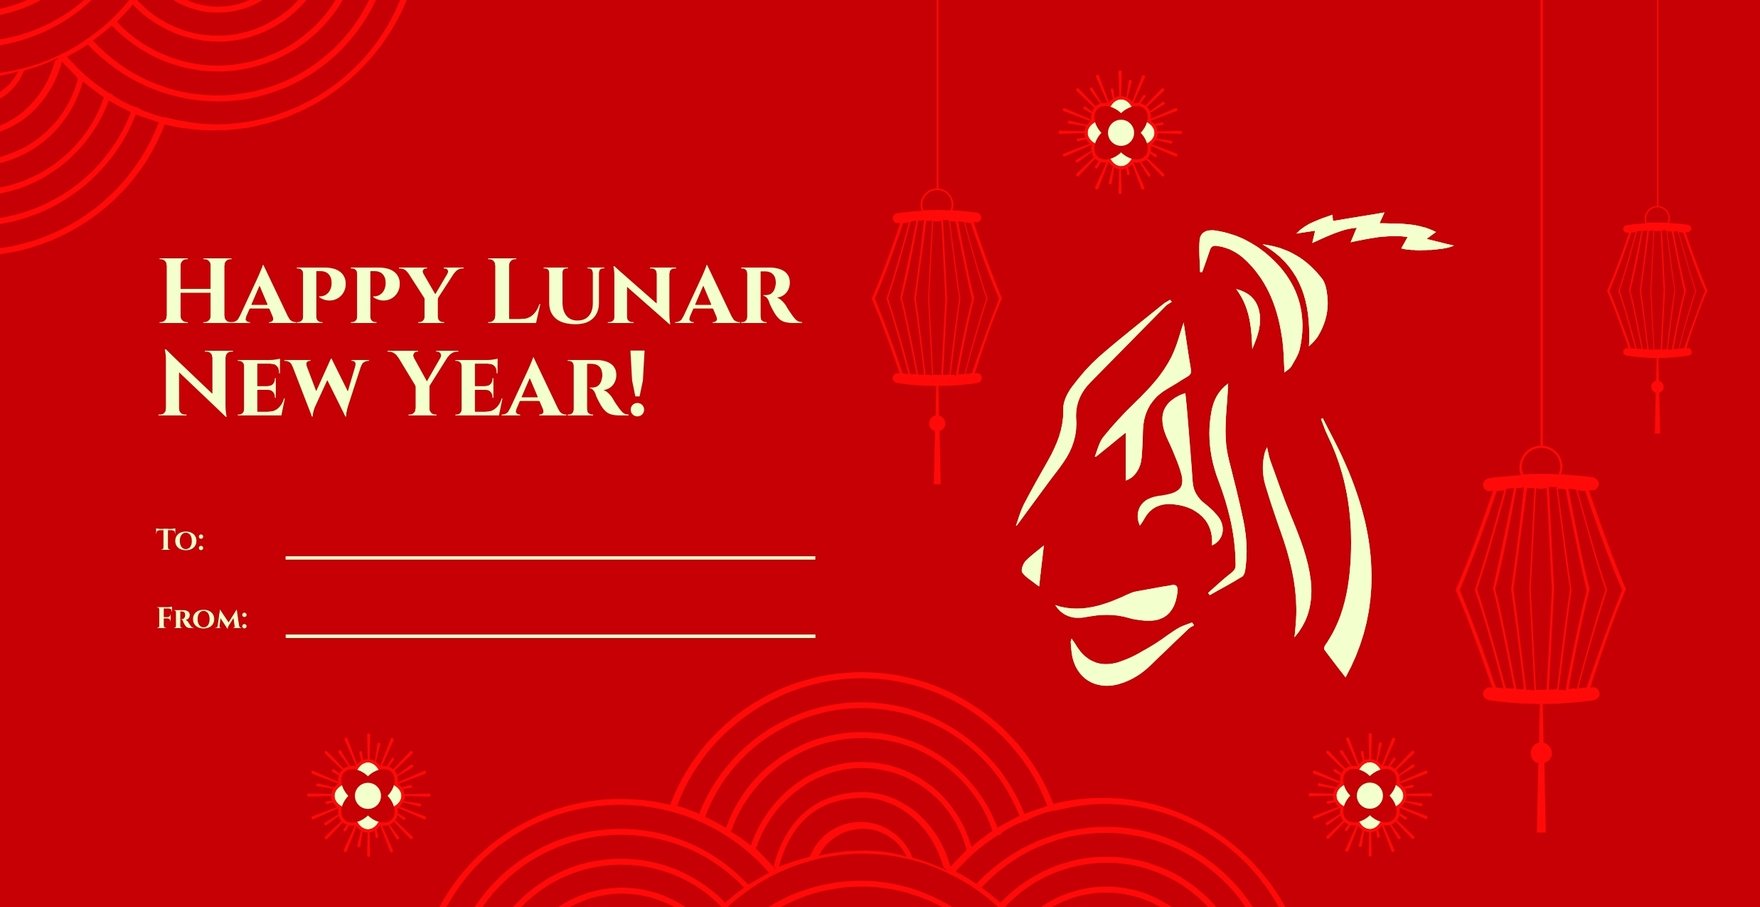 Lunar New Year Gift Card